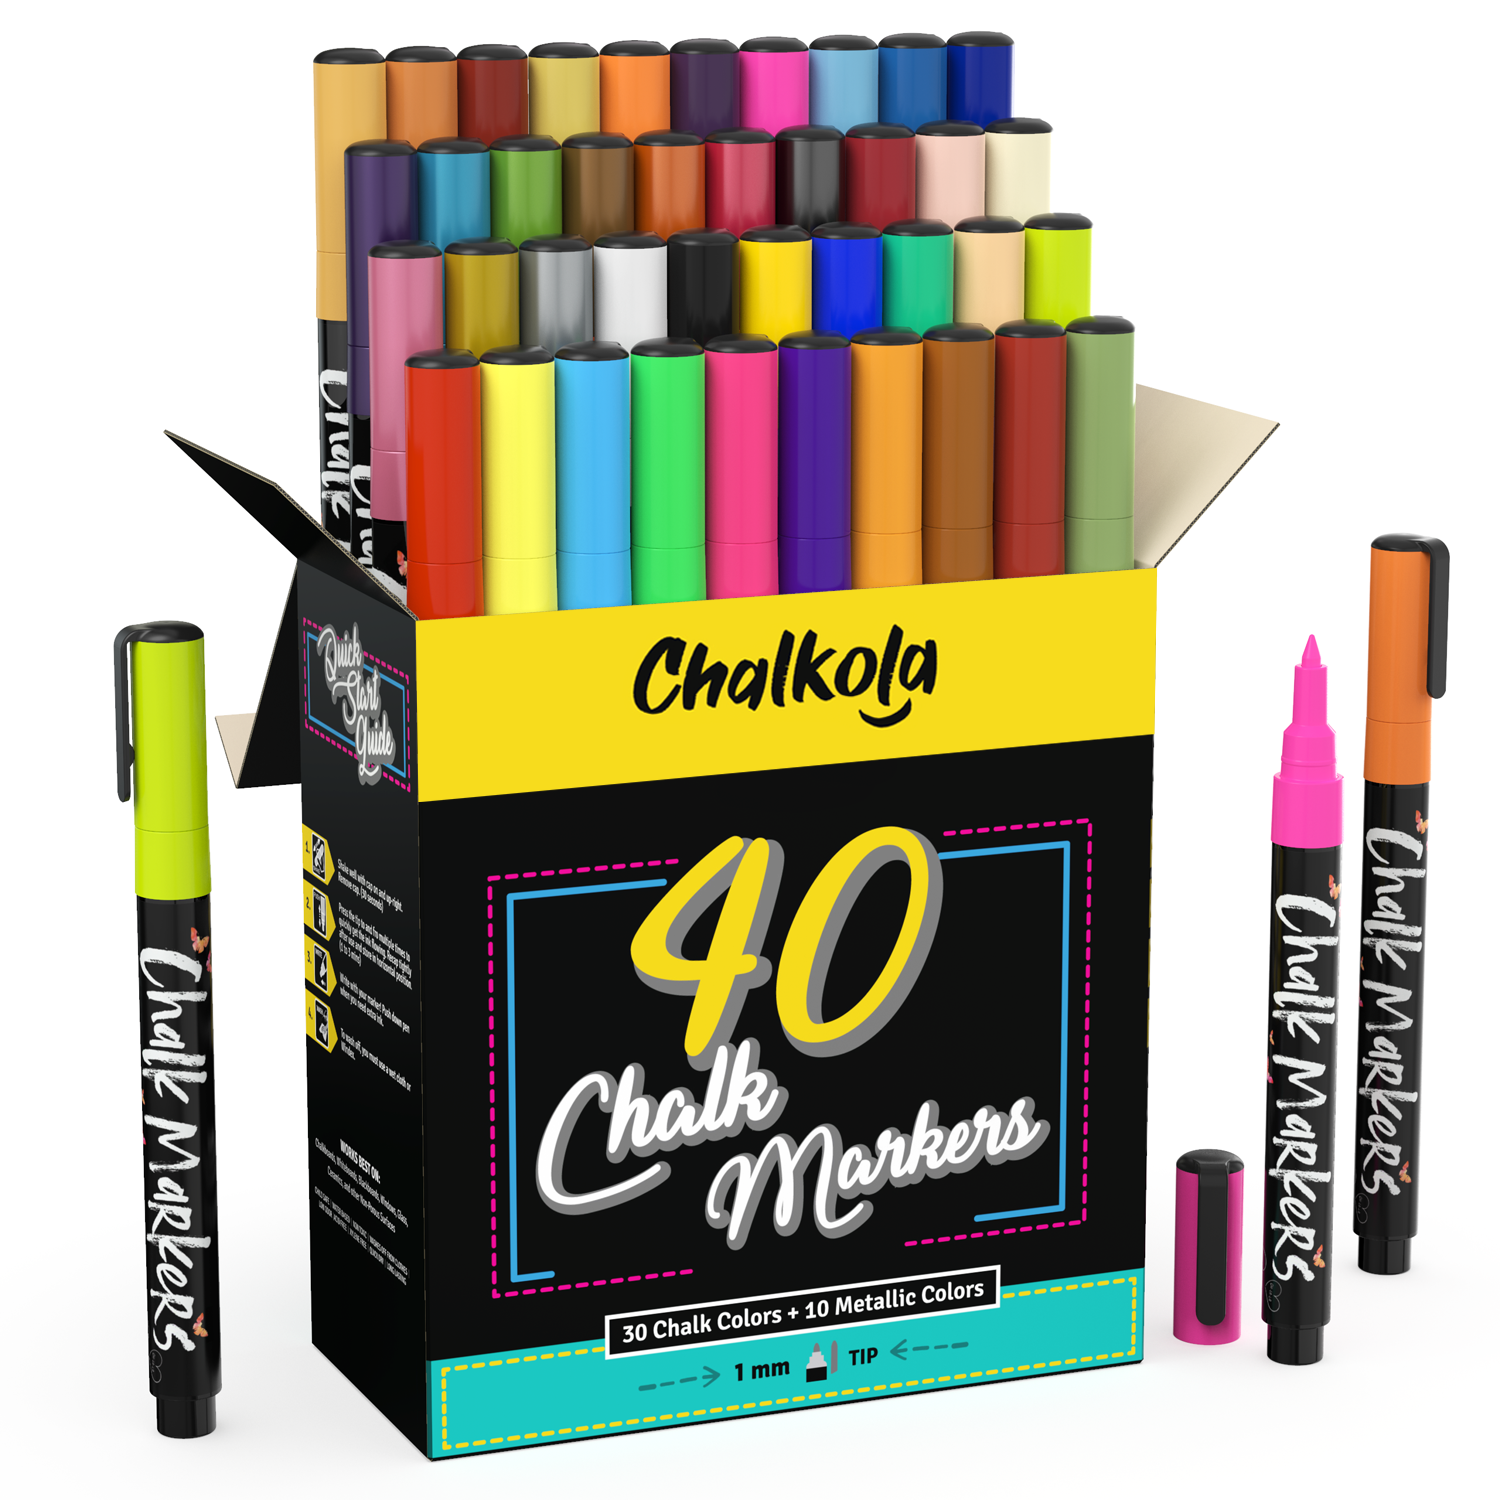 SILENART White Chalk Markers - 6 Pack Liquid Chalk Pen - Chalkboard Markers  - Chalk Marker for Blackboard, Signs, Windows, Glass - 3-6mm Chisel Tip